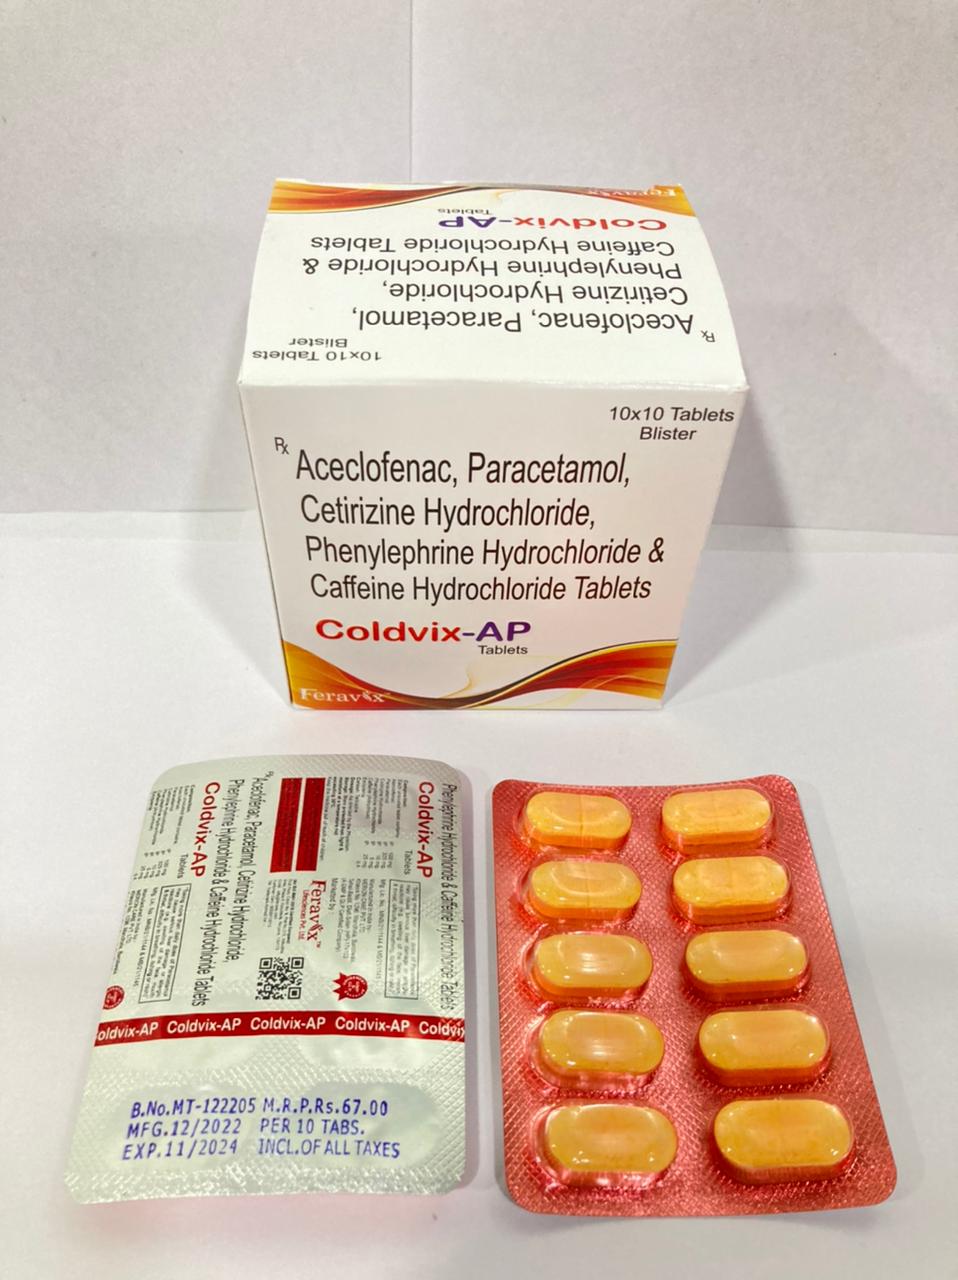 Product Name: COLDVIX AP Tablets, Compositions of COLDVIX AP Tablets are ACECLOFENAC 100 MG, PARACETAMOL 325 MG, CETIRIZINE DIHYDROCHLORIDE 10 MG,PHENYLEPHRINE HYDROCHLORIDE 5 MG, CAFFEINE 25 MG - Feravix Lifesciences